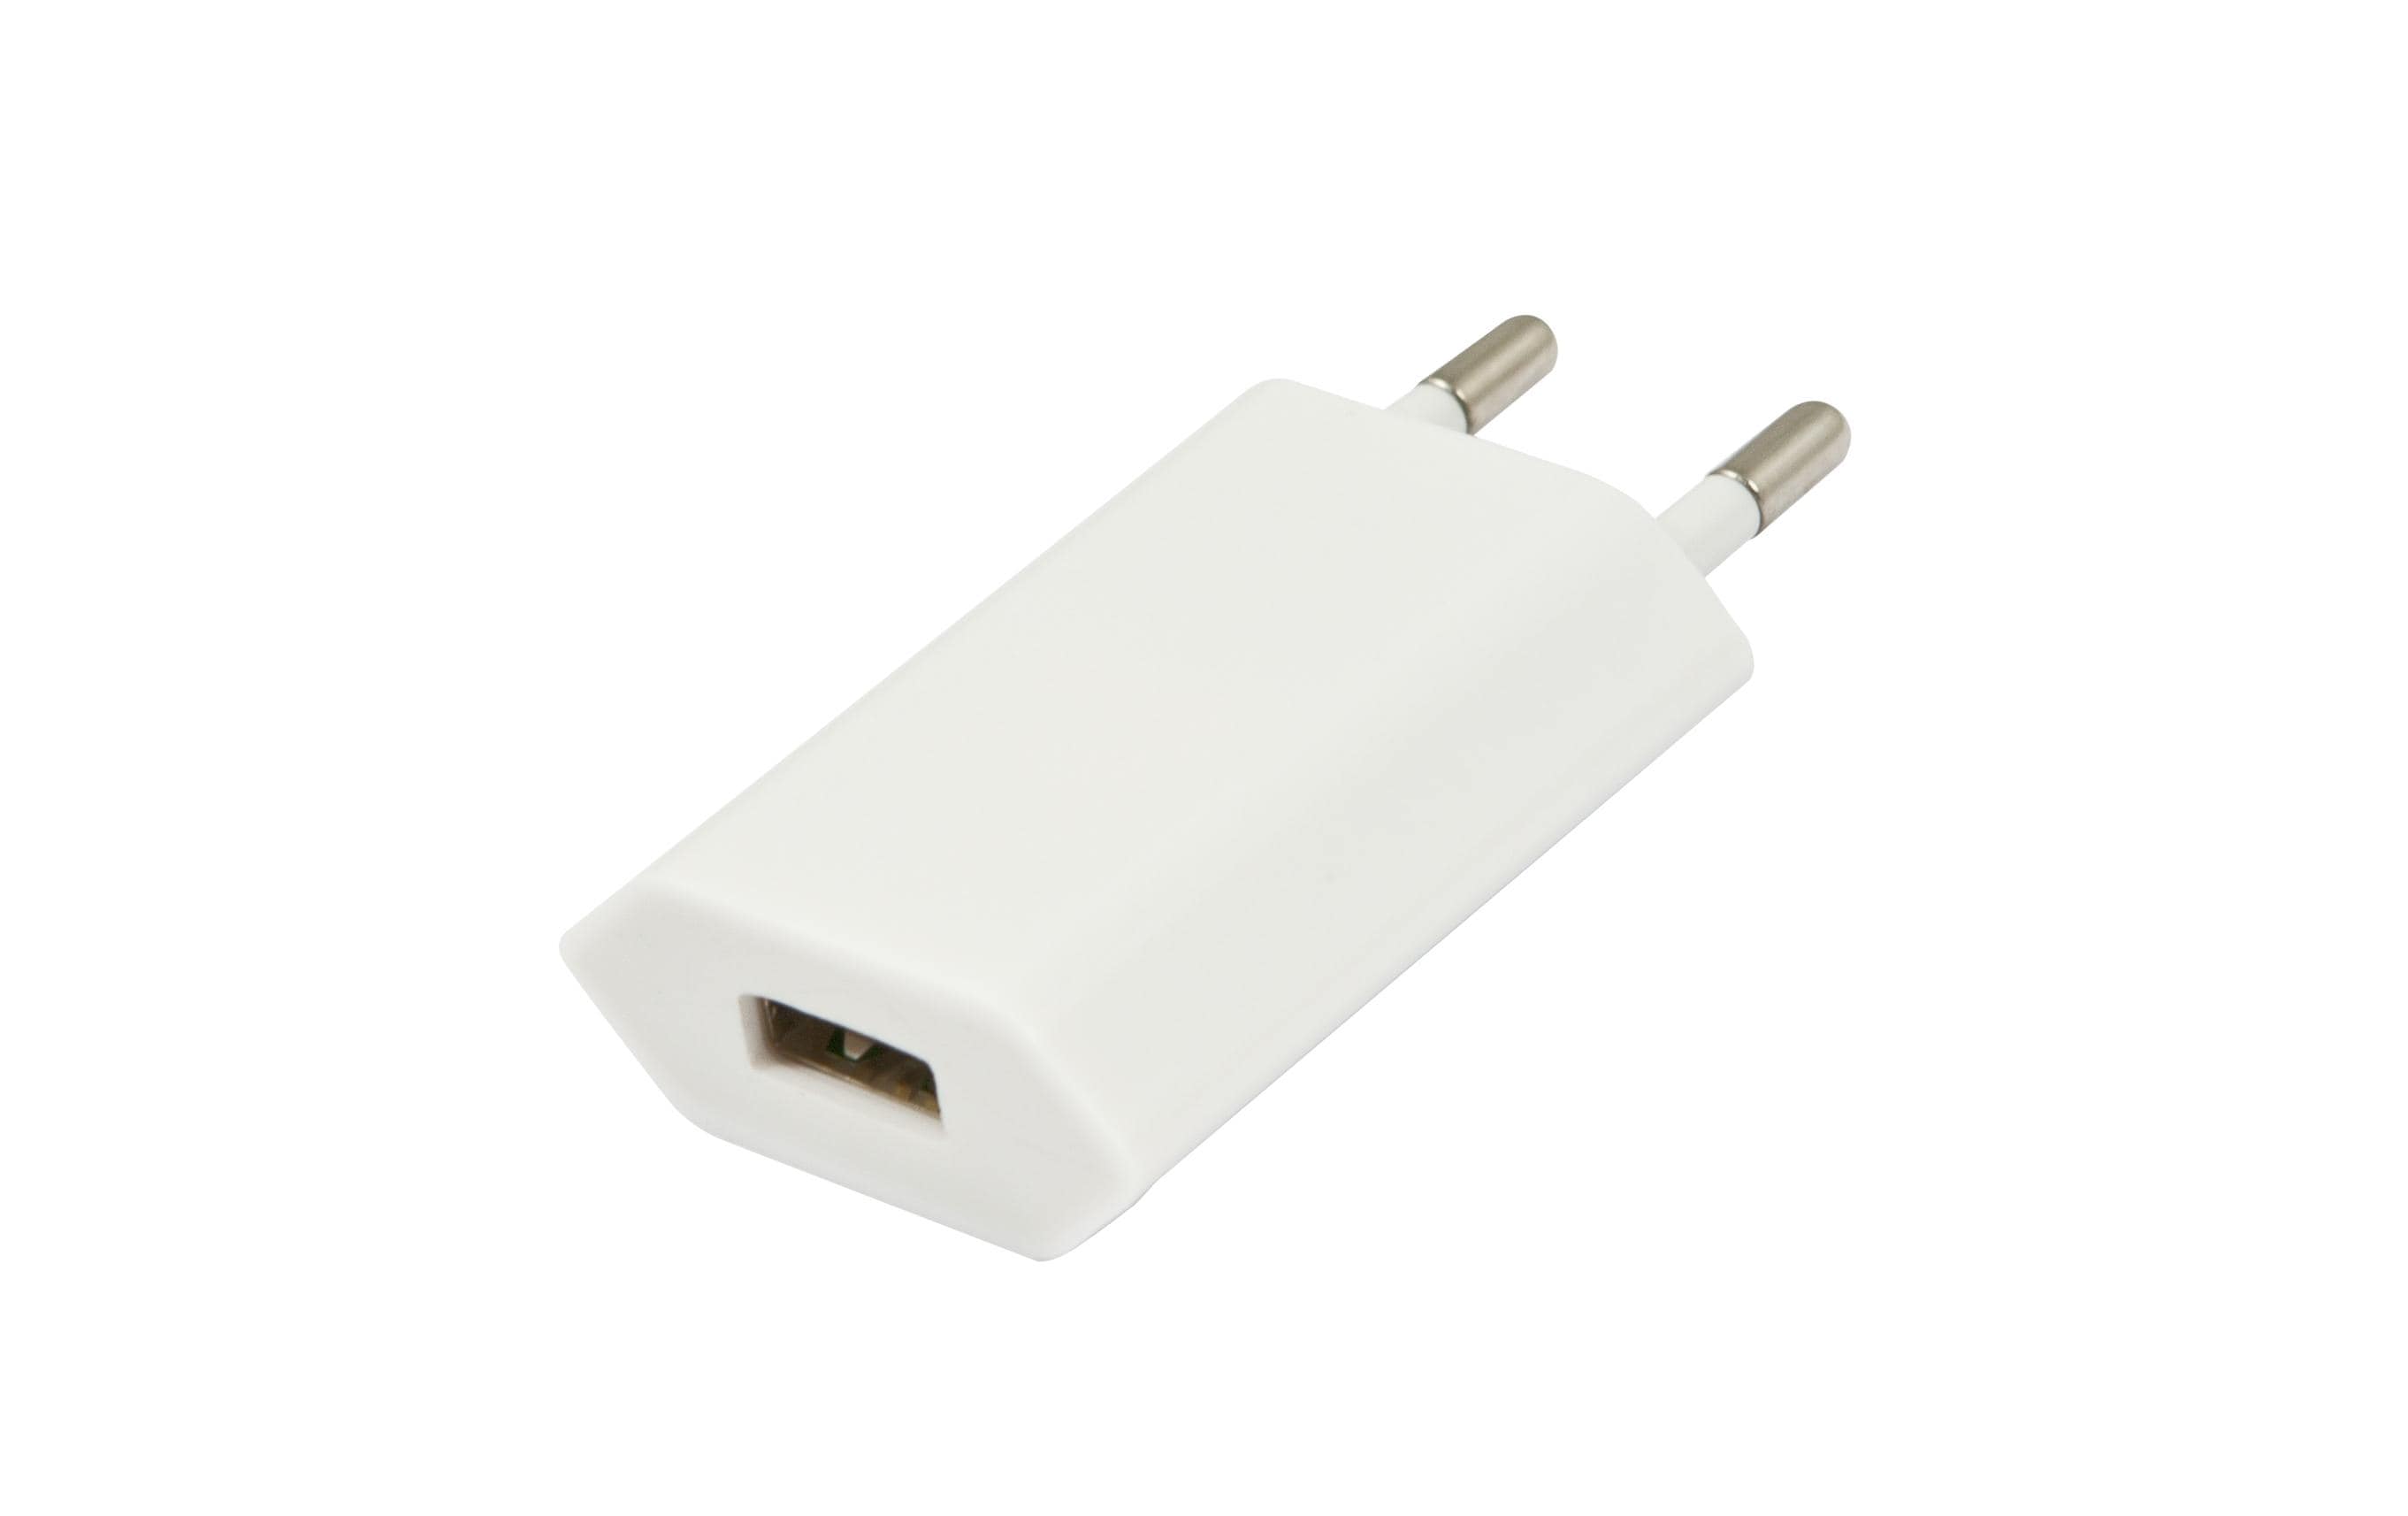 Flepo Netzteil USB 1-fach 100V/240V-1A